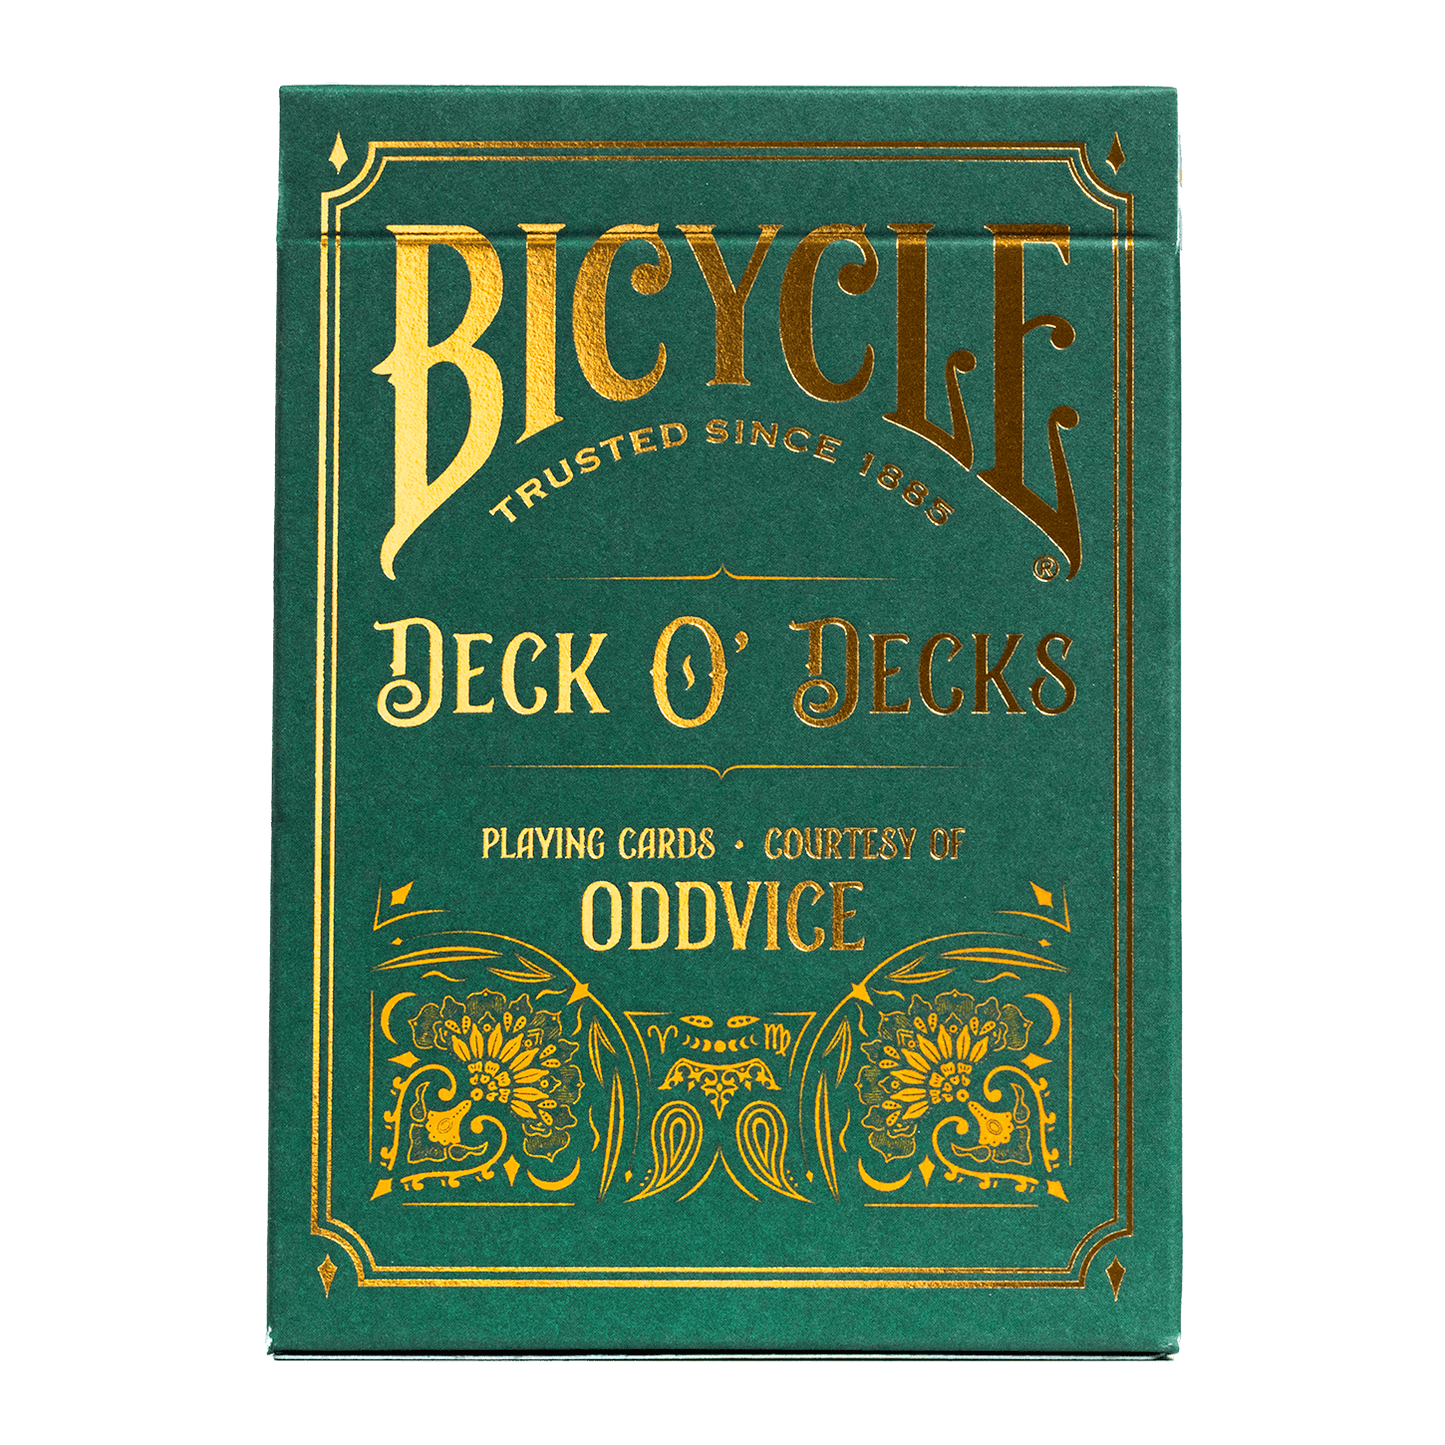 Bicycle Oddvice Deck O' Decks